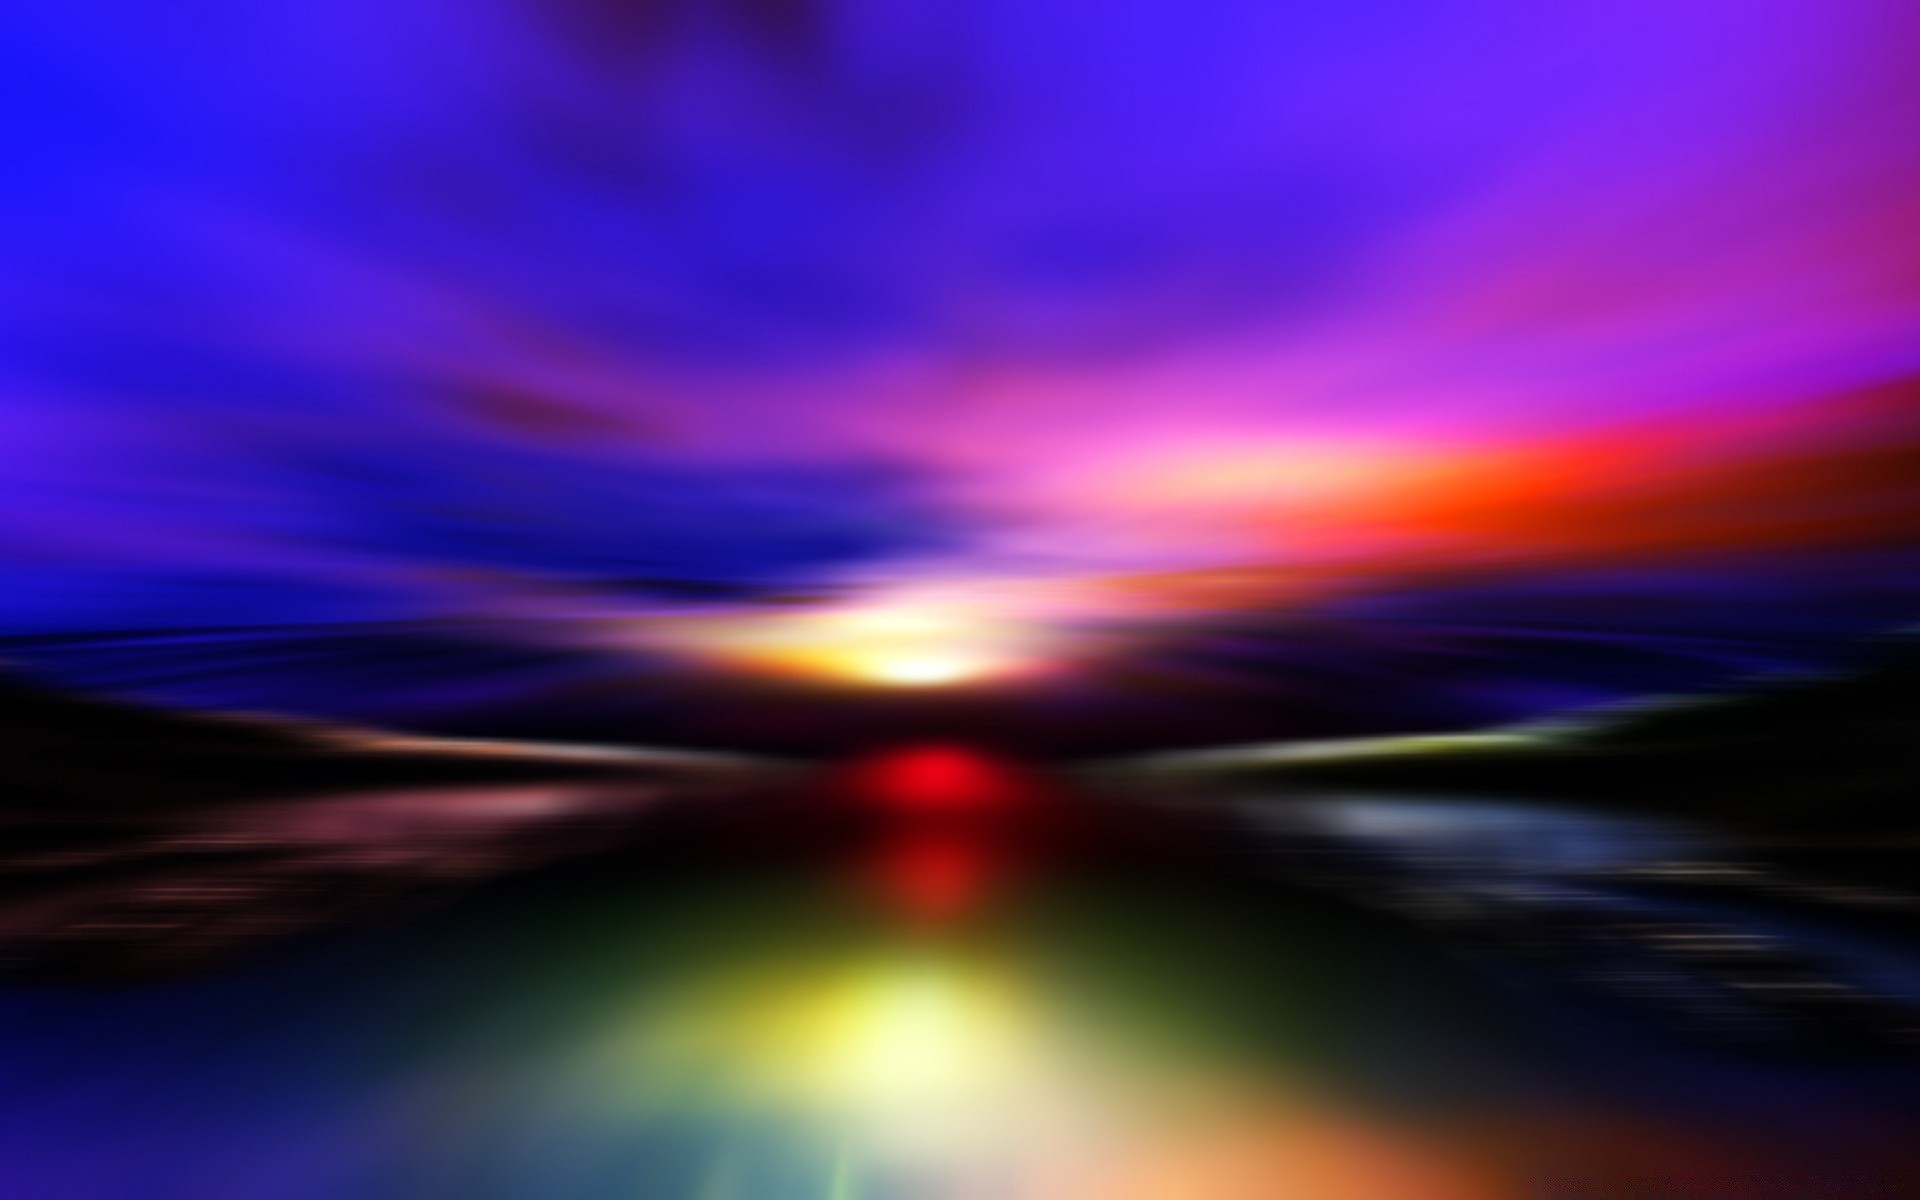 abstract blur light art motion wallpaper bright luminescence illustration color graphic evening